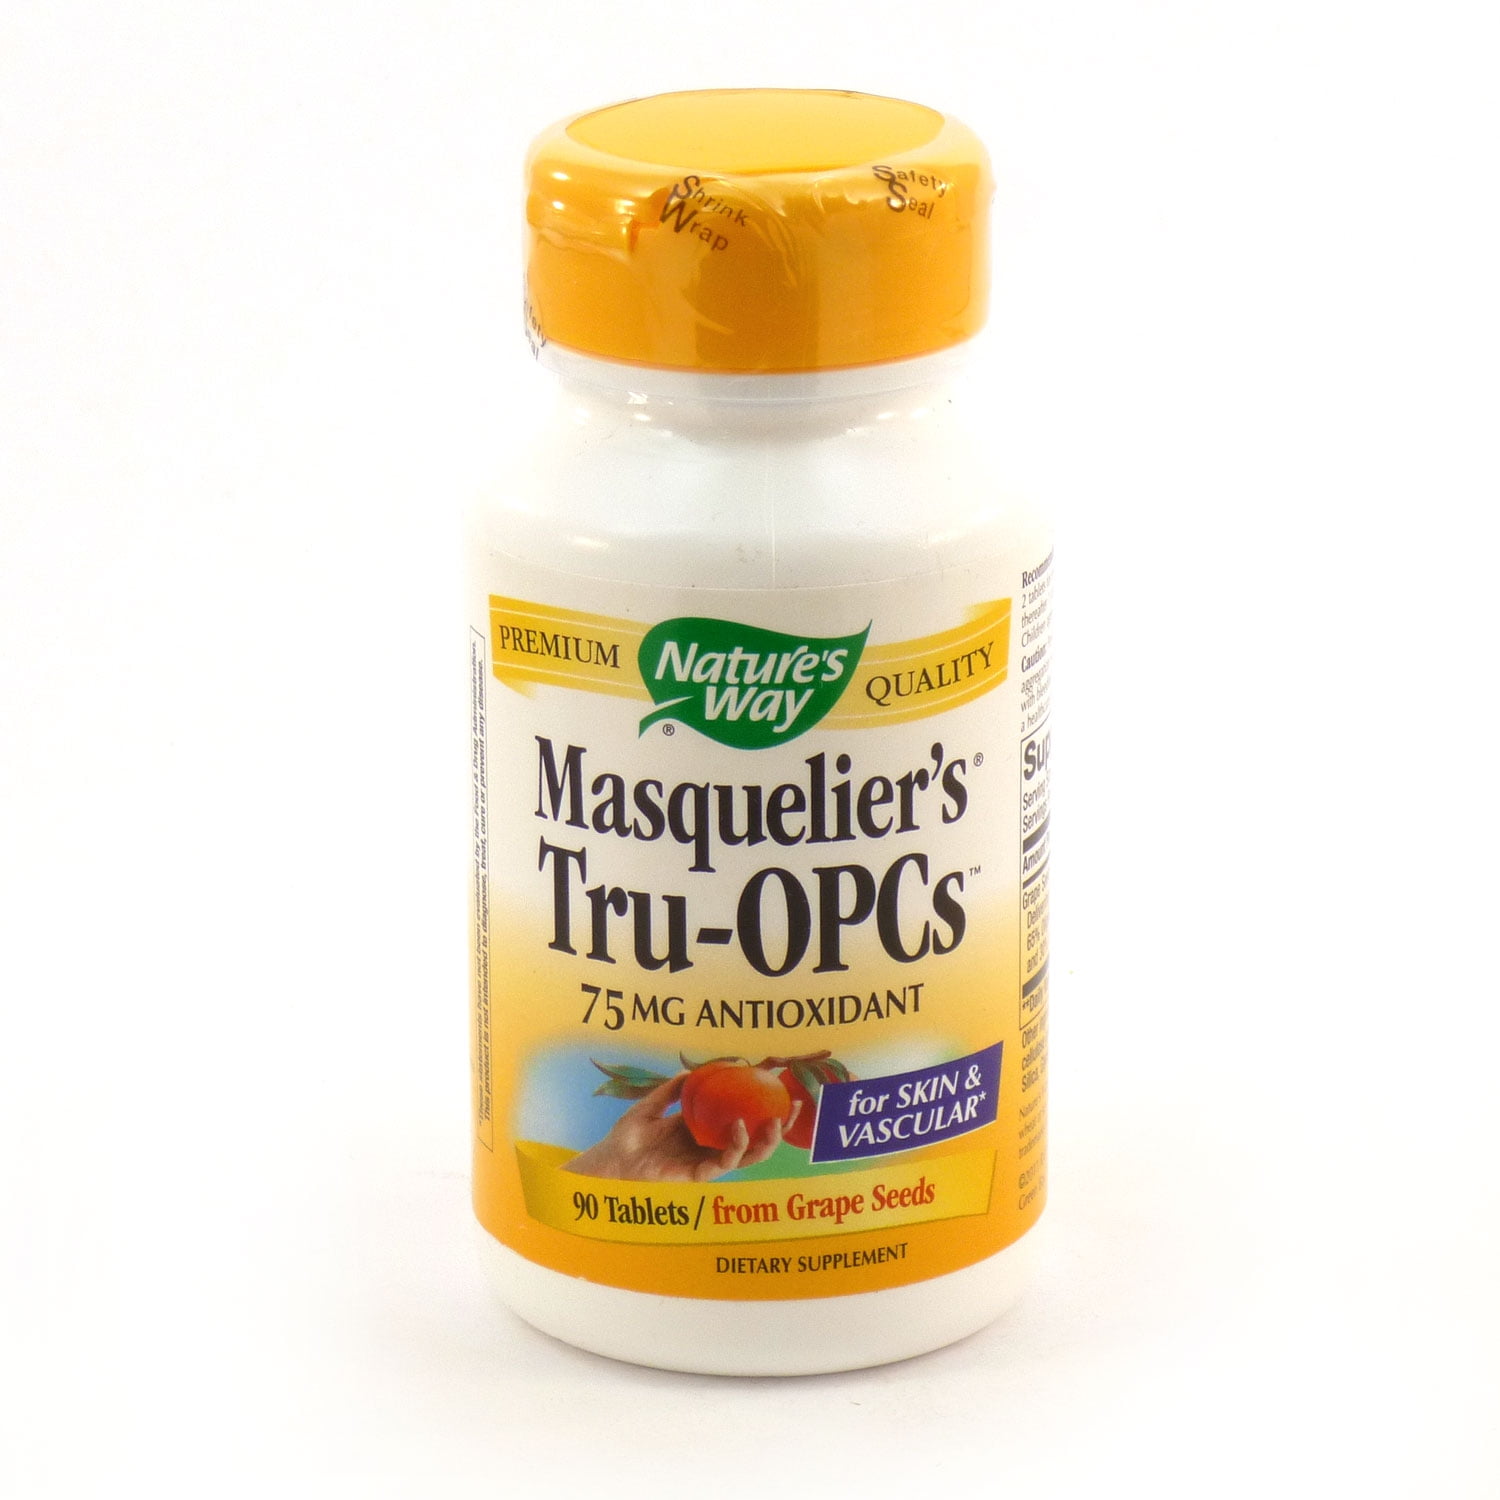 Nature's Way Masquelier's Tru-OPCs 75 mg - 90 Tablets 